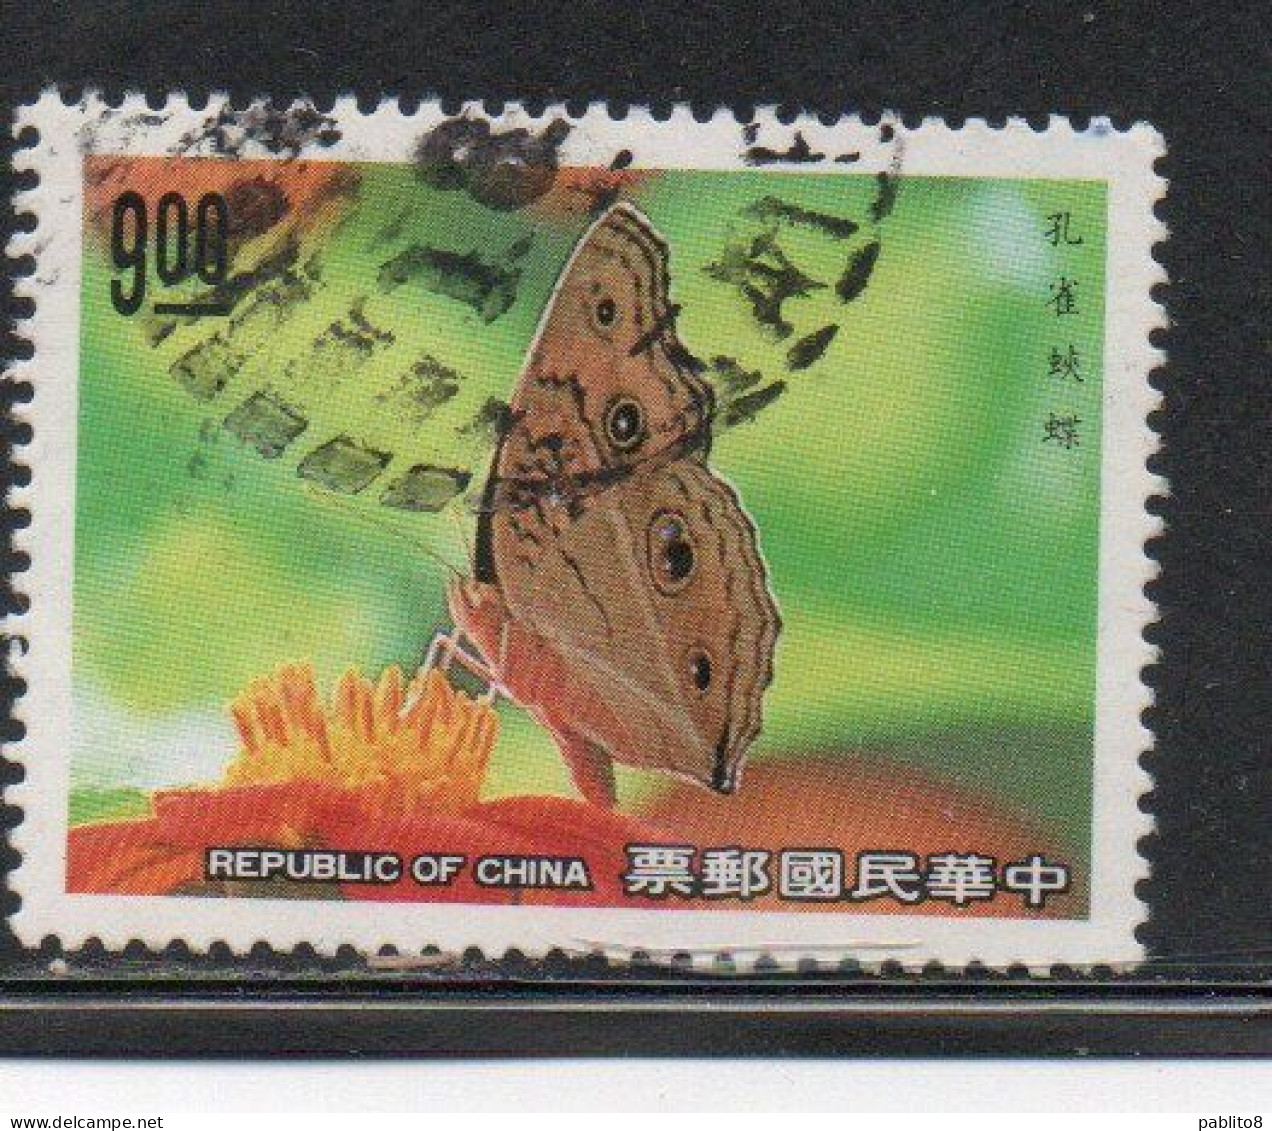 CHINA REPUBLIC CINA TAIWAN FORMOSA 1990 BUTTERFLIES PRECIS ALMANA 9$ USED USATO OBLITERE' - Gebraucht